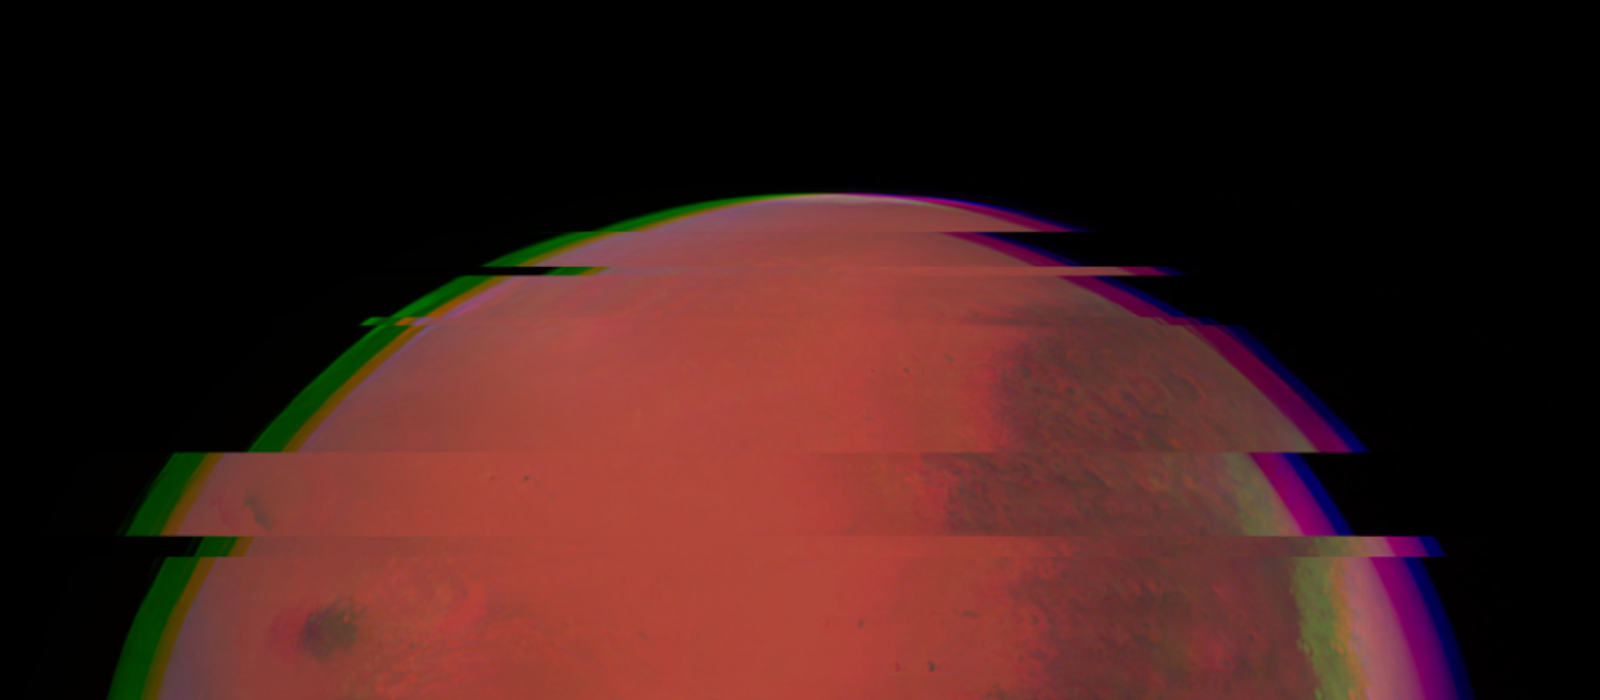 Mars with glitch effect